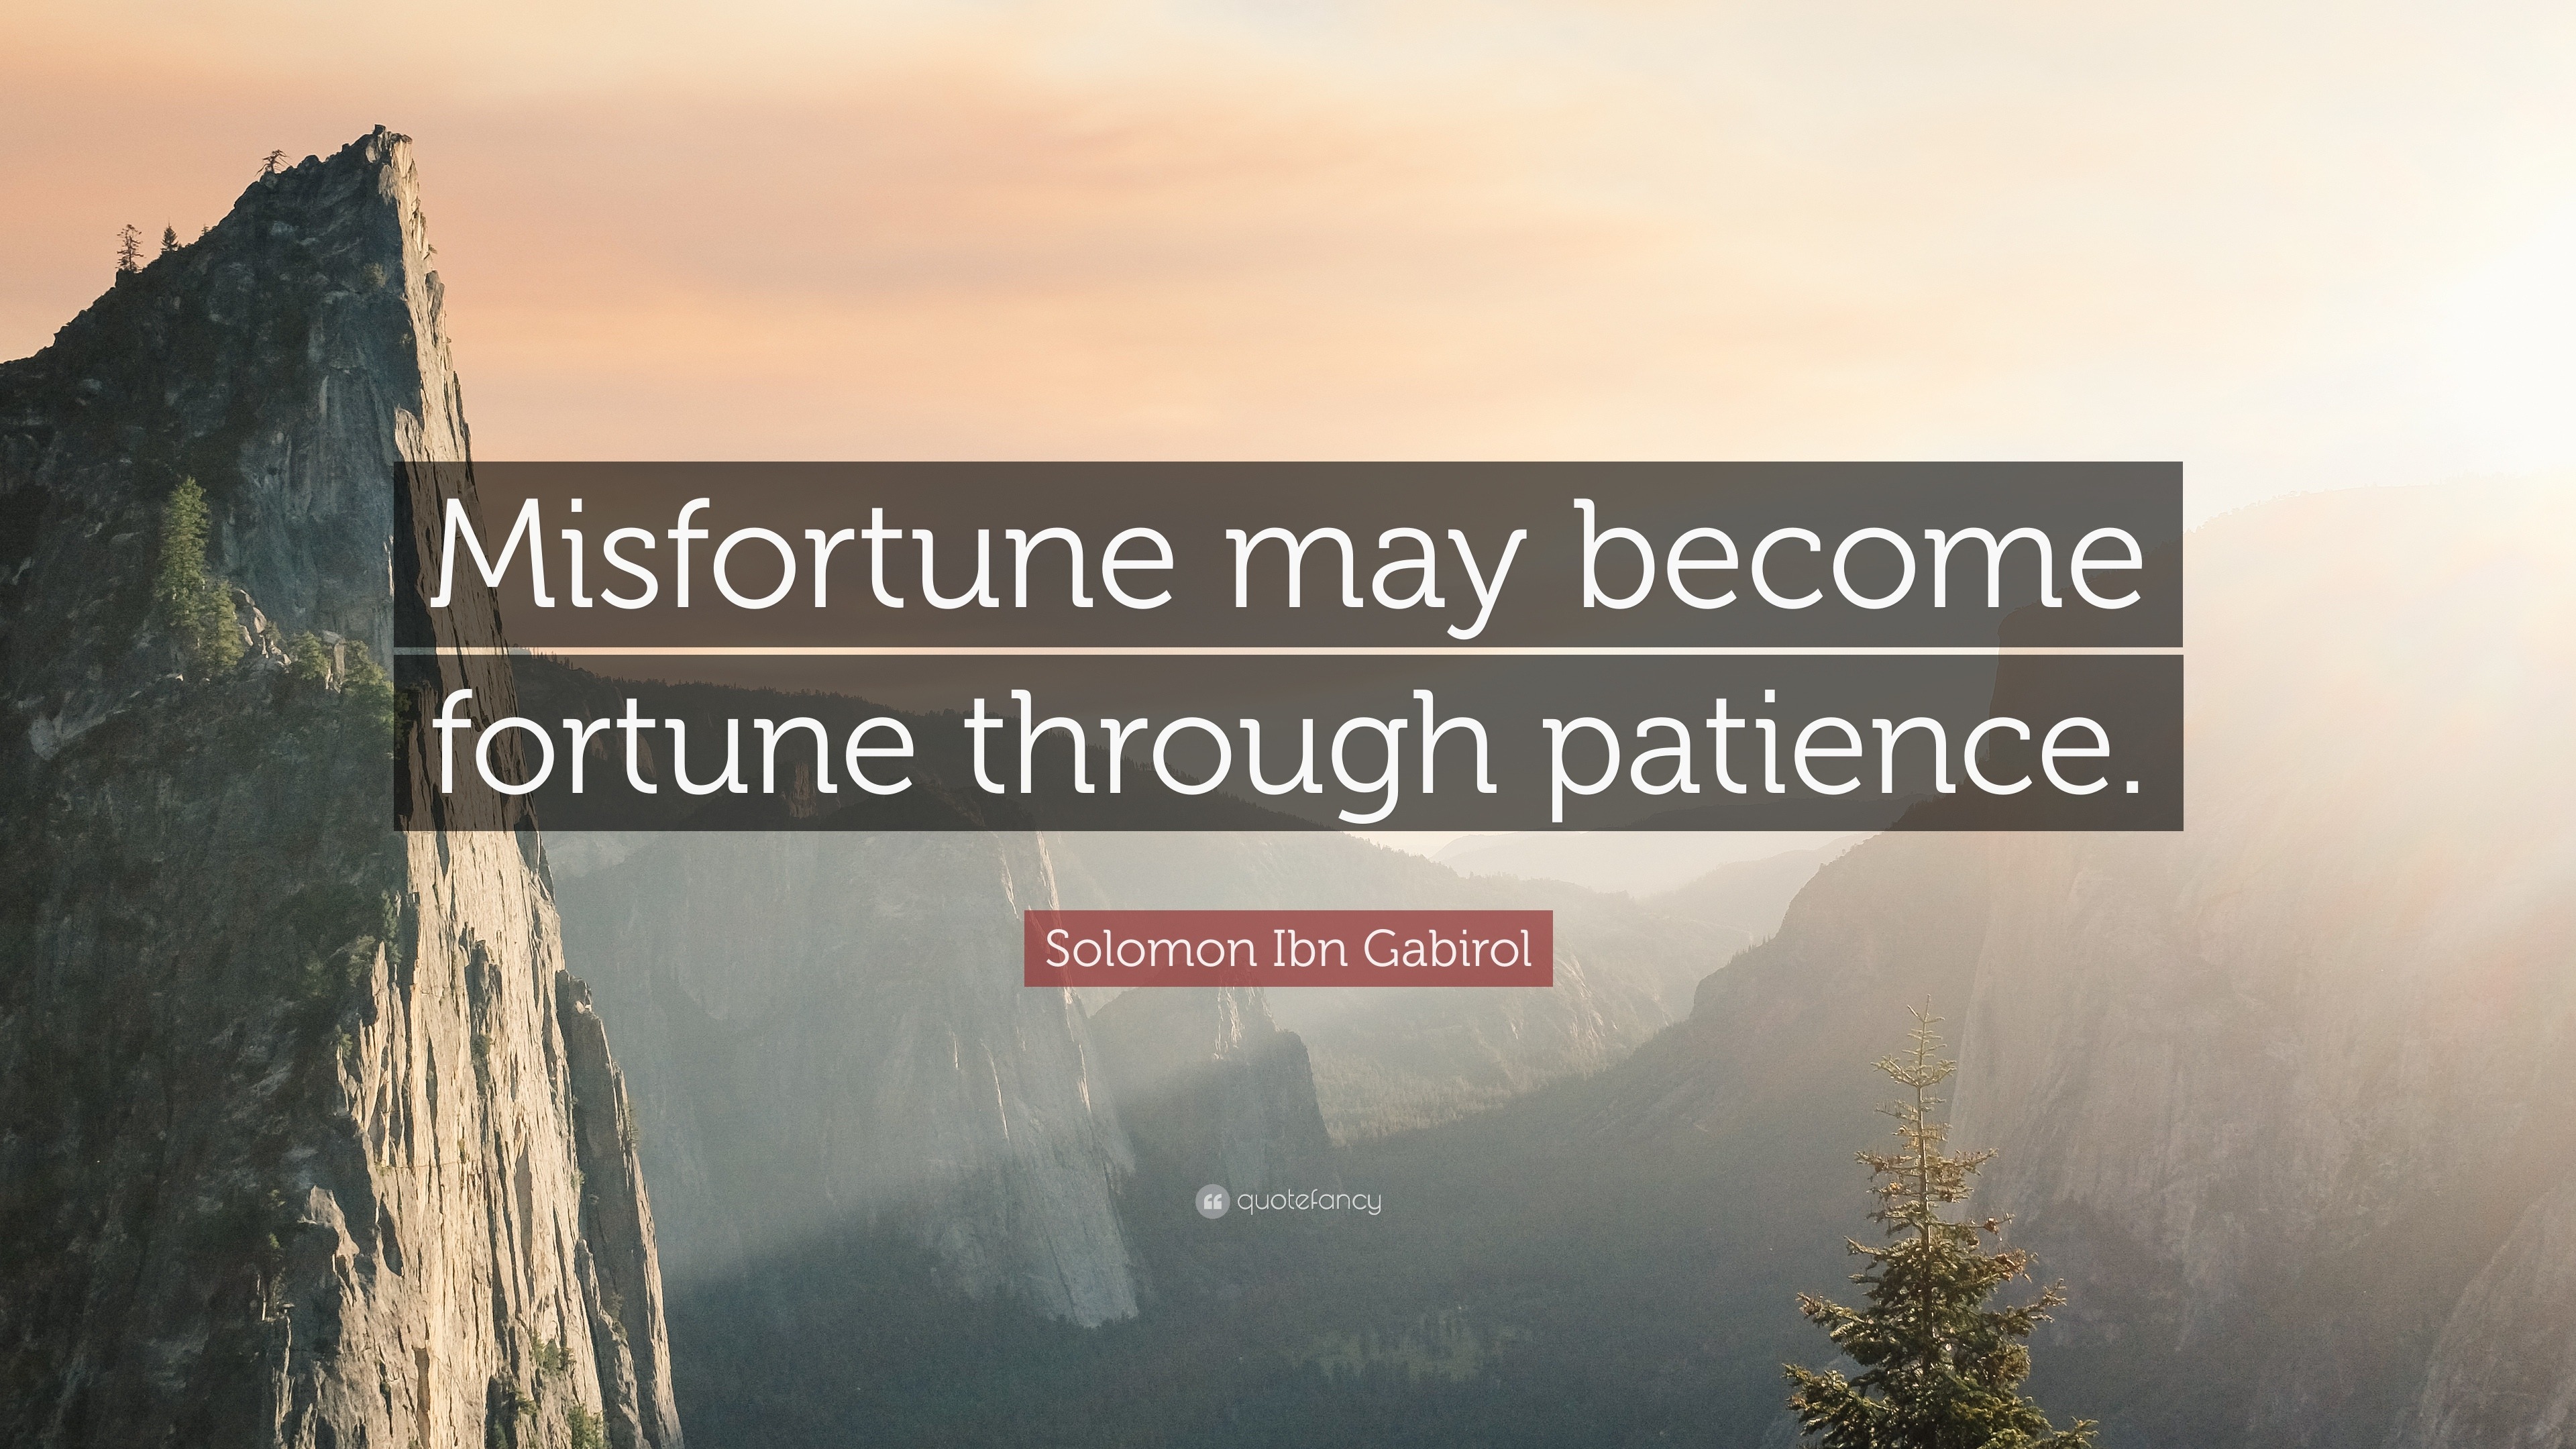 Solomon Ibn Gabirol Quote: “Misfortune may become fortune through ...